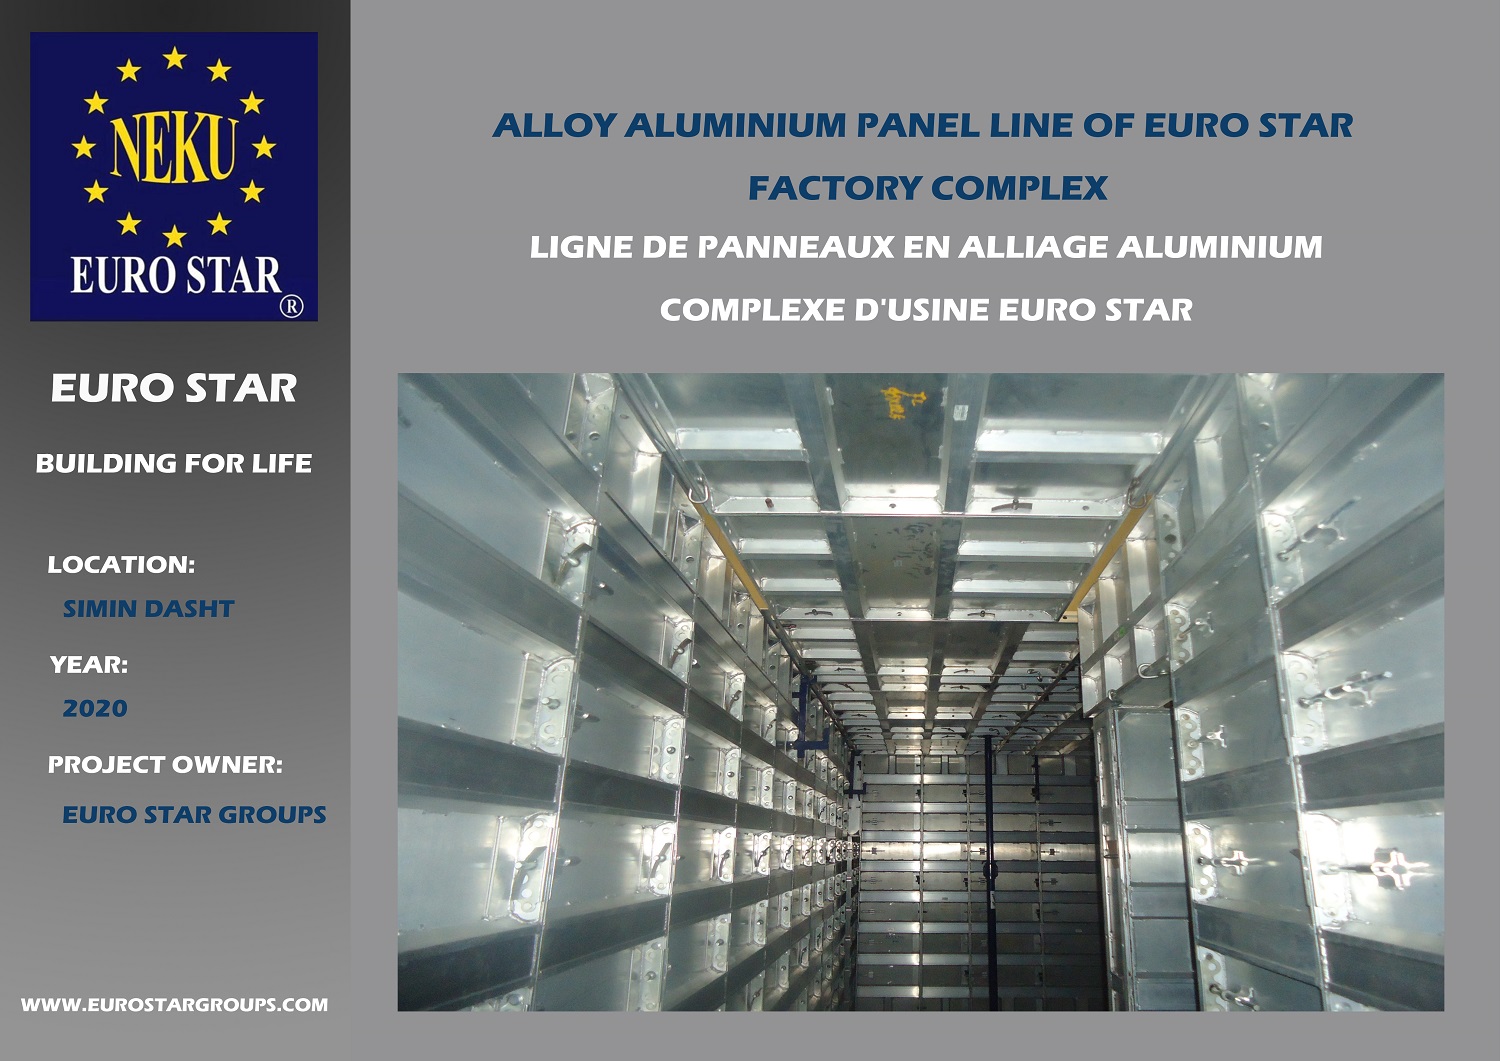 Alloy aluminum panel